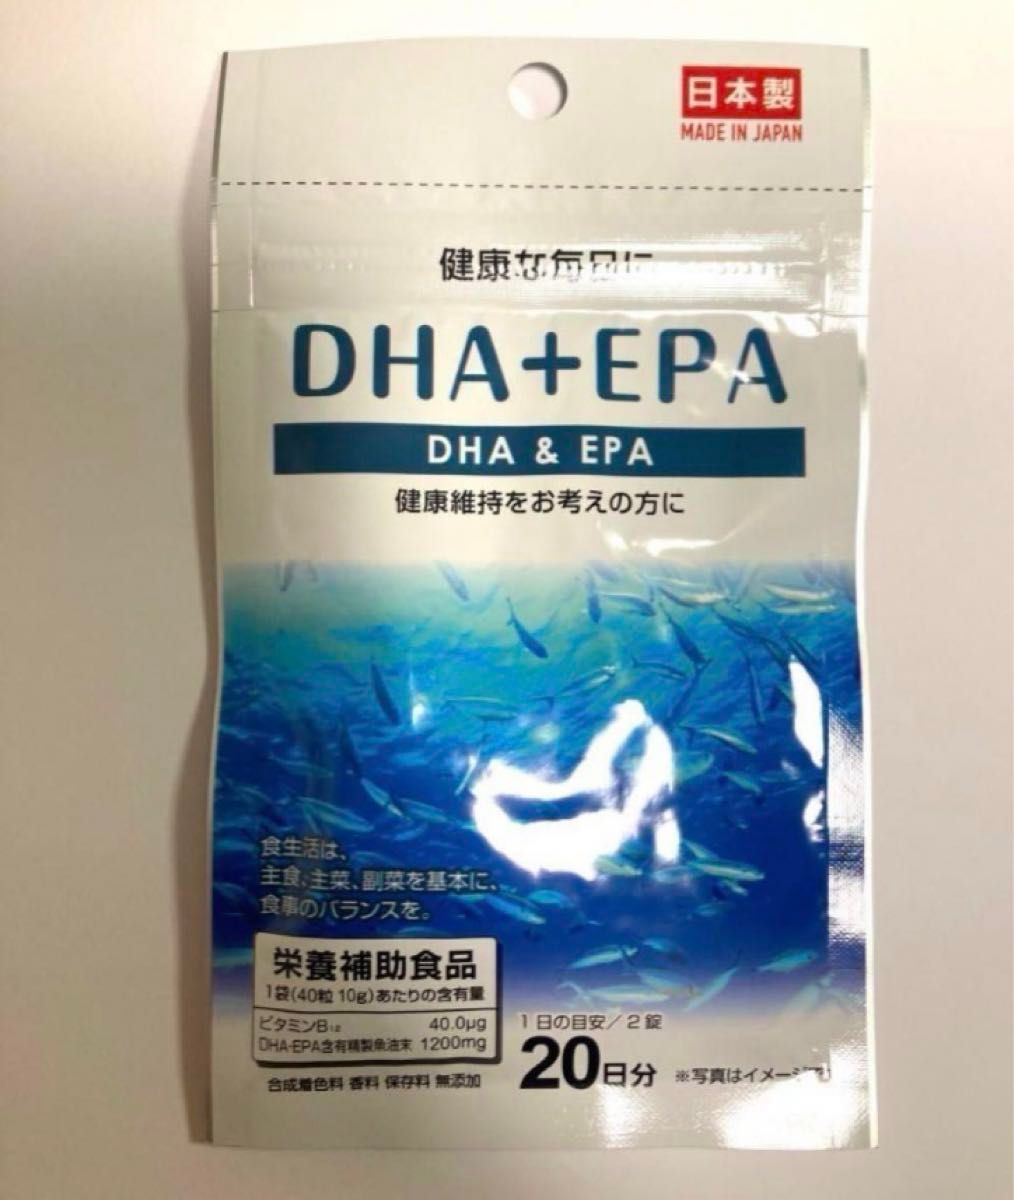 ★★★DHA+EPA サプリメント★★★2袋セット(1日2錠20日分×2パック)日本製☆